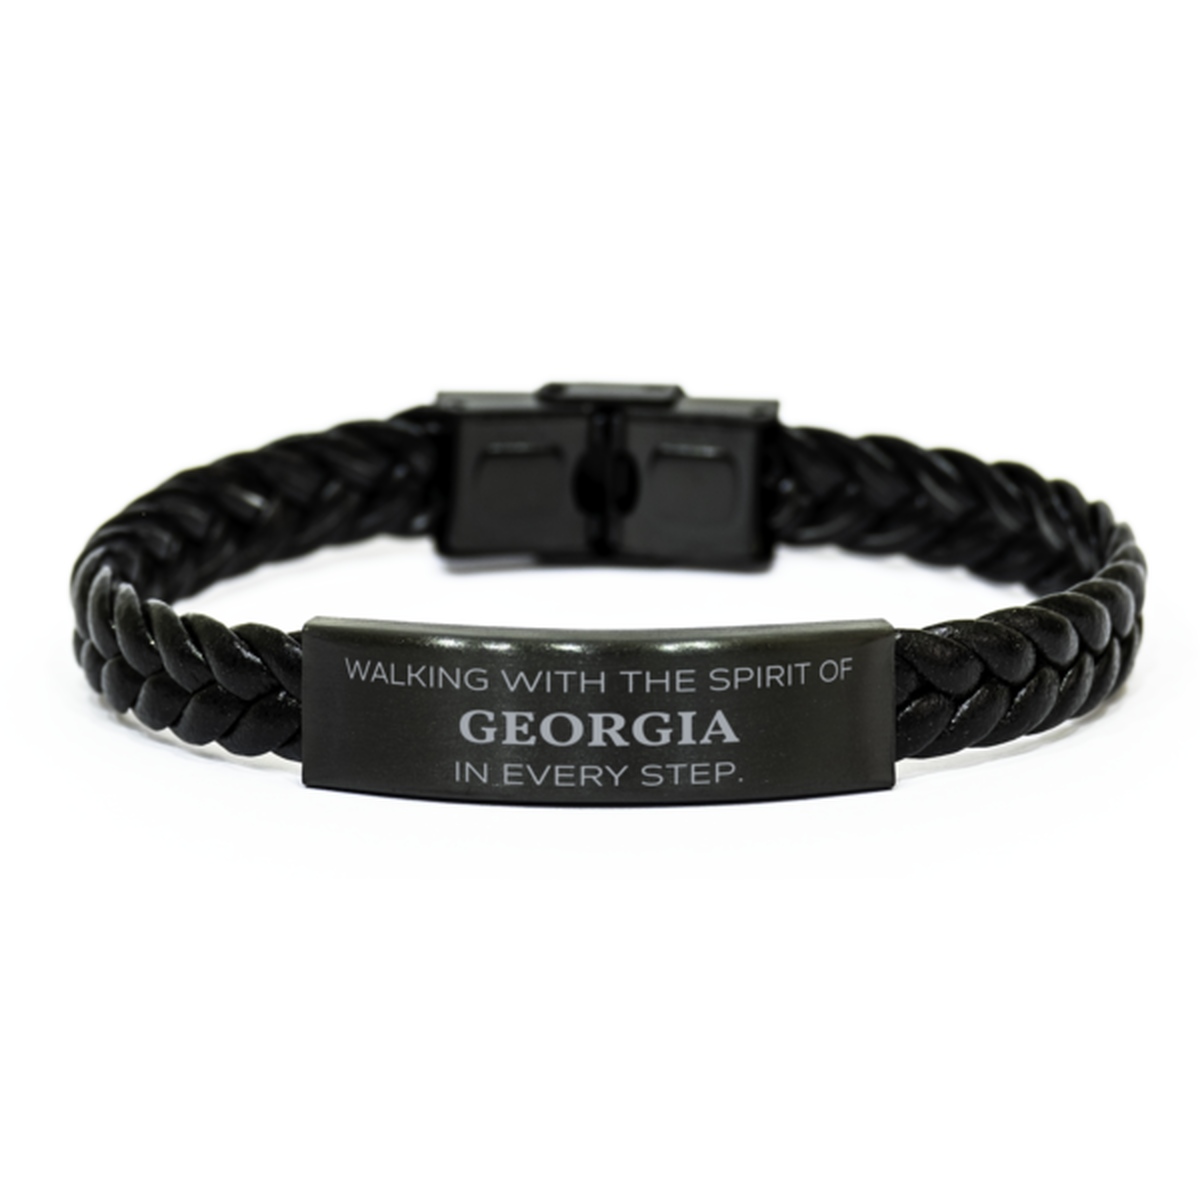 Georgia Gifts, Walking with the spirit, Love Georgia Birthday Christmas Braided Leather Bracelet For Georgia People, Men, Women, Friends